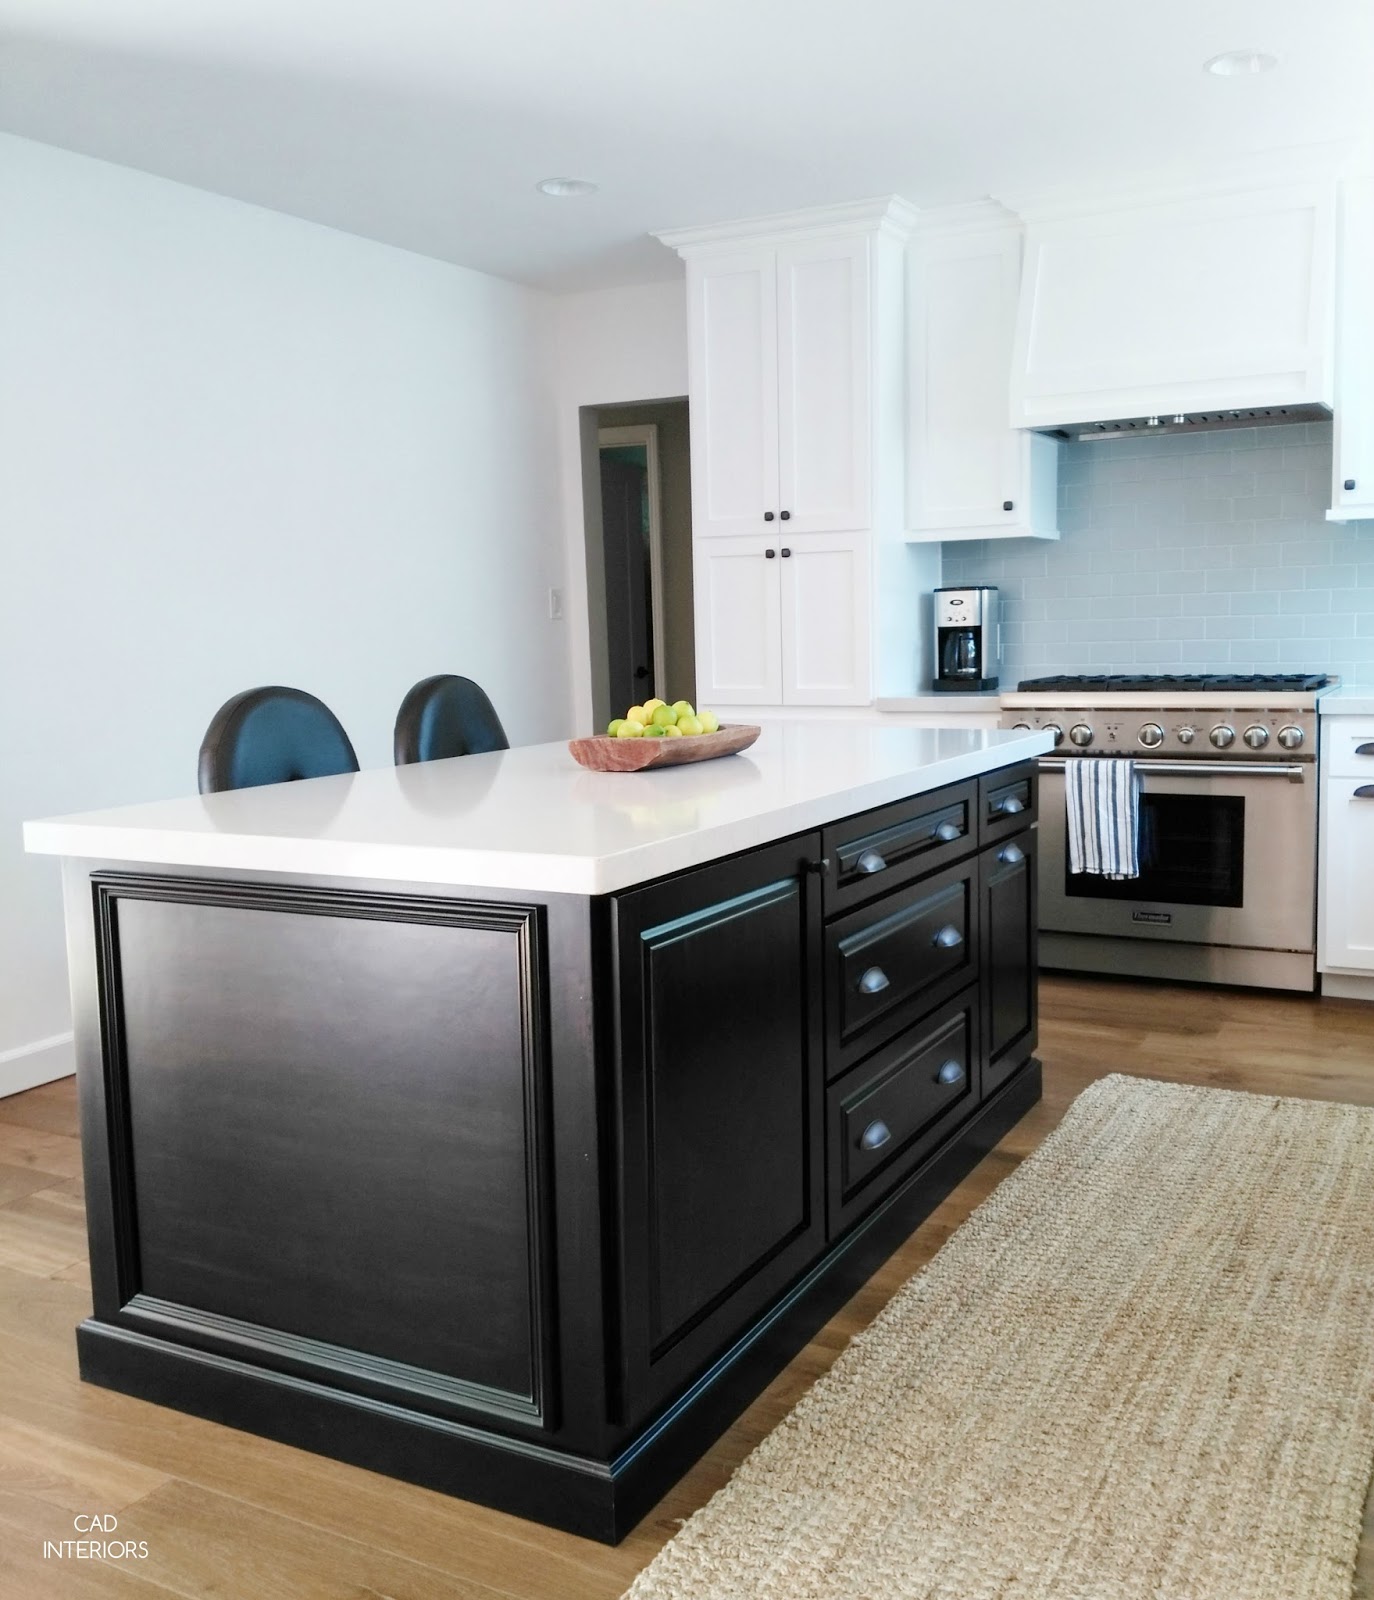 CAD INTERIORS kitchen remodel furniture island molding paneling interior design tips